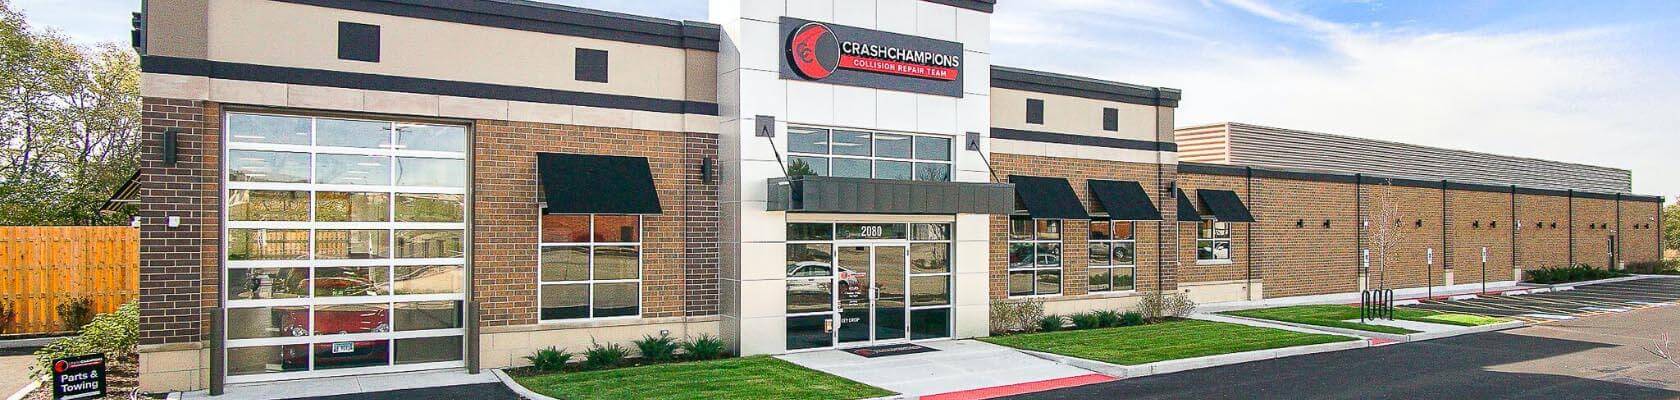 Crash Champions buys 24-location auto body MSO Signature Collision Centers